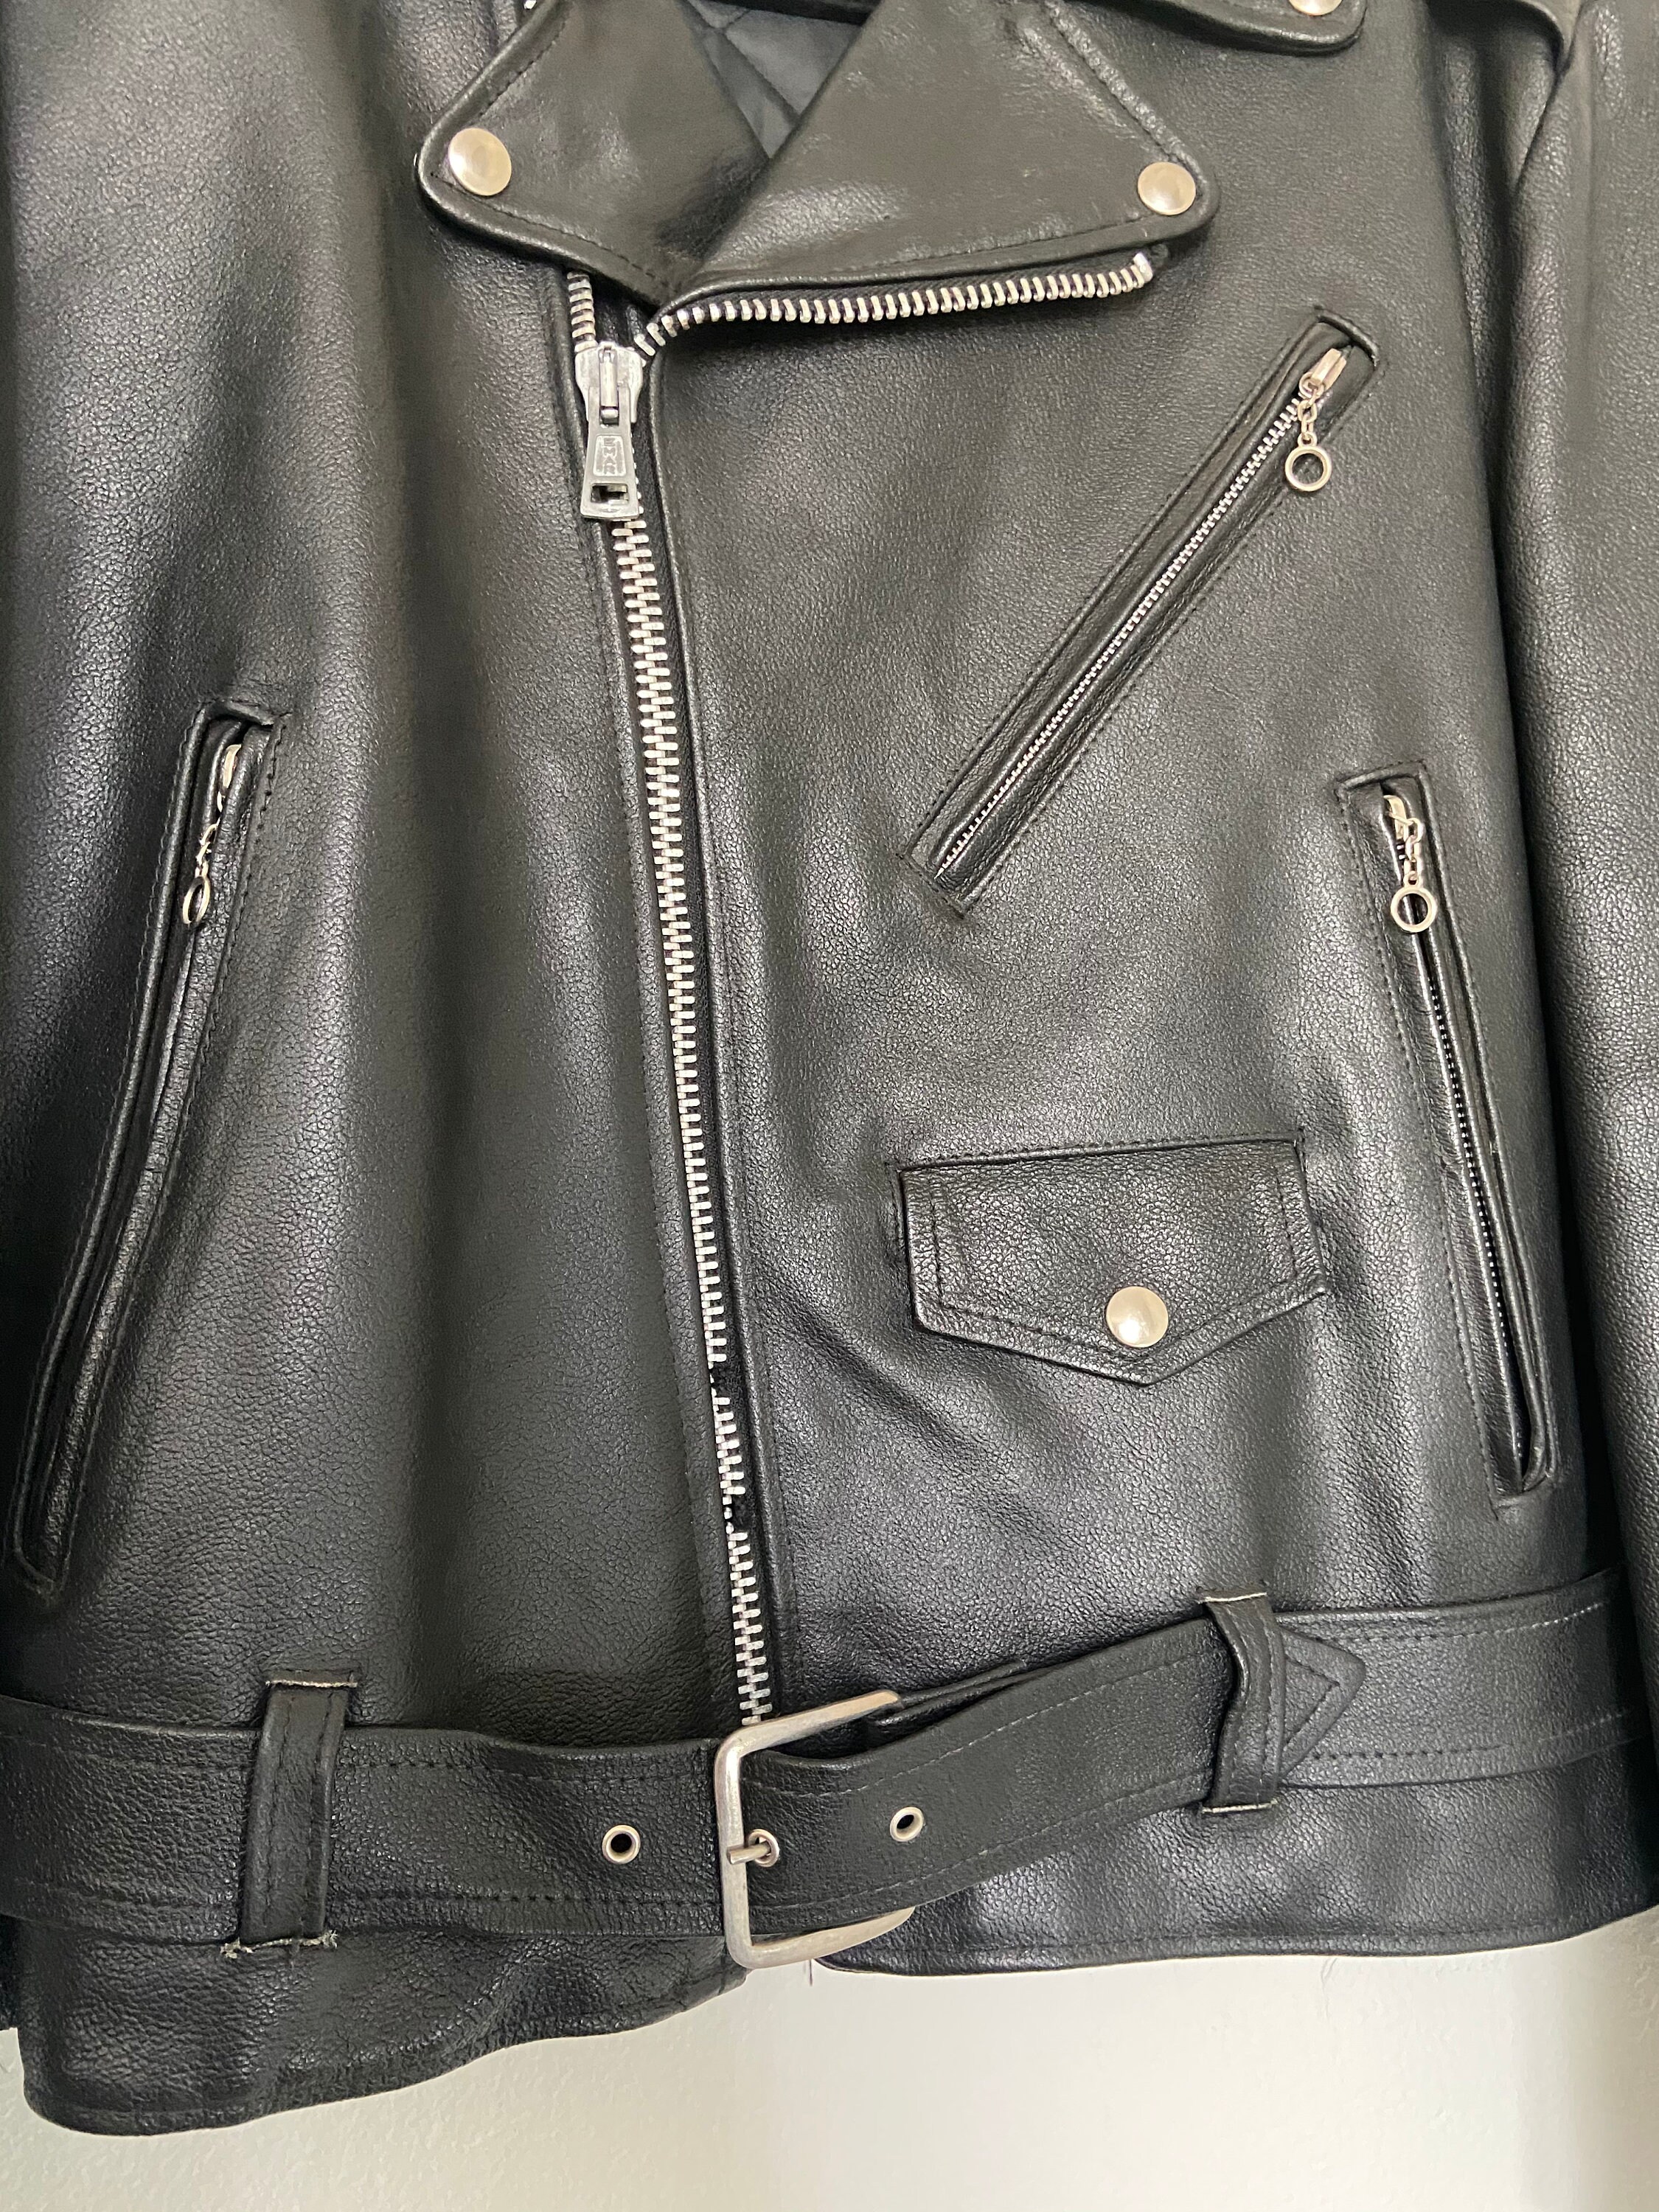 Vintage Black Leather Cropped Biker Jacket - Raleigh Vintage